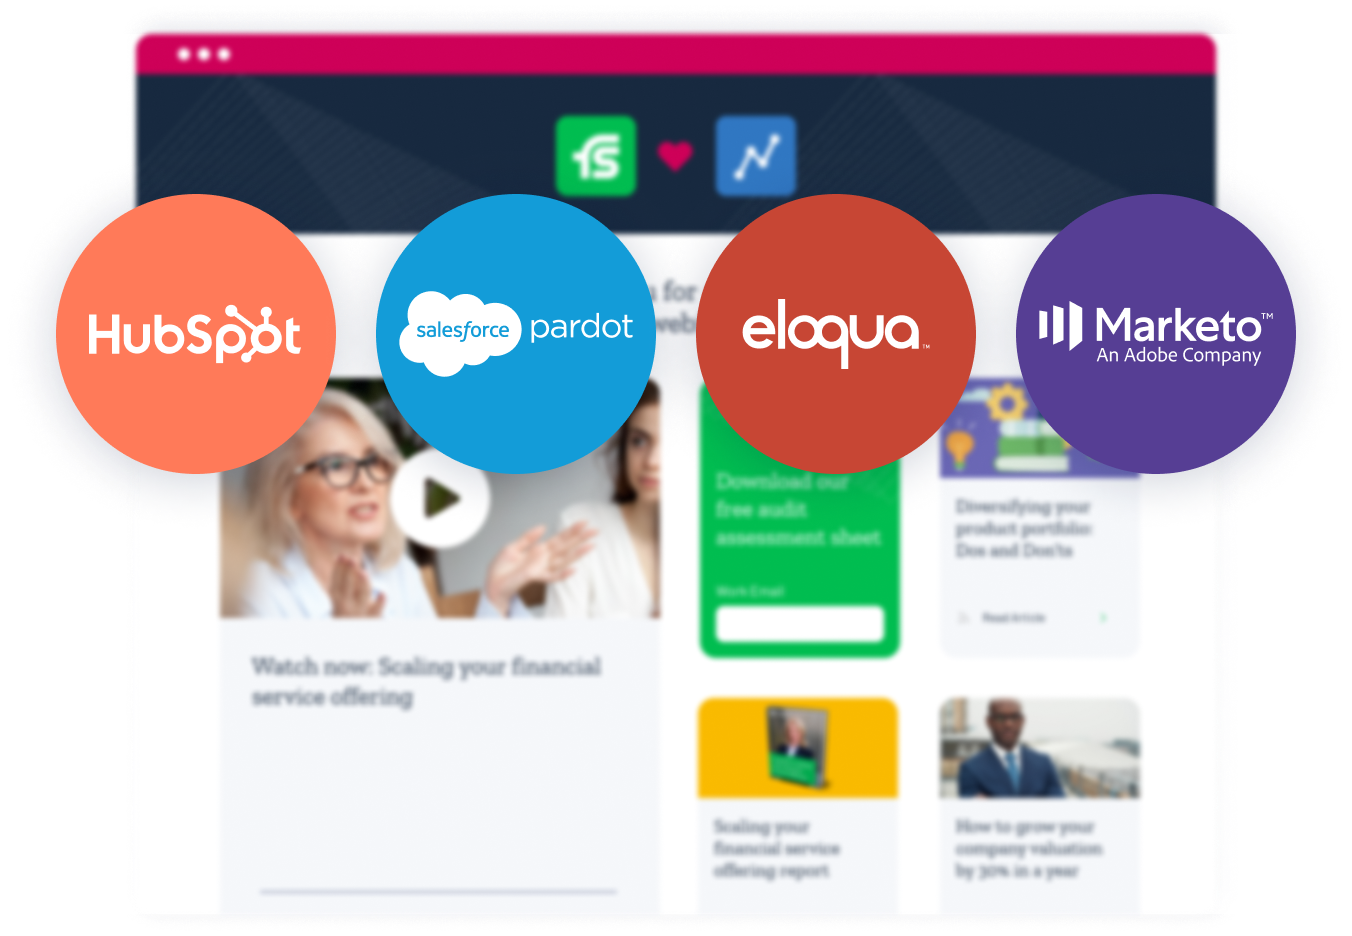 Uberflip Content Experience Platform marketing automation platform (MAP) integrations with Eloqua, Marketo, Pardot, and HubSpot